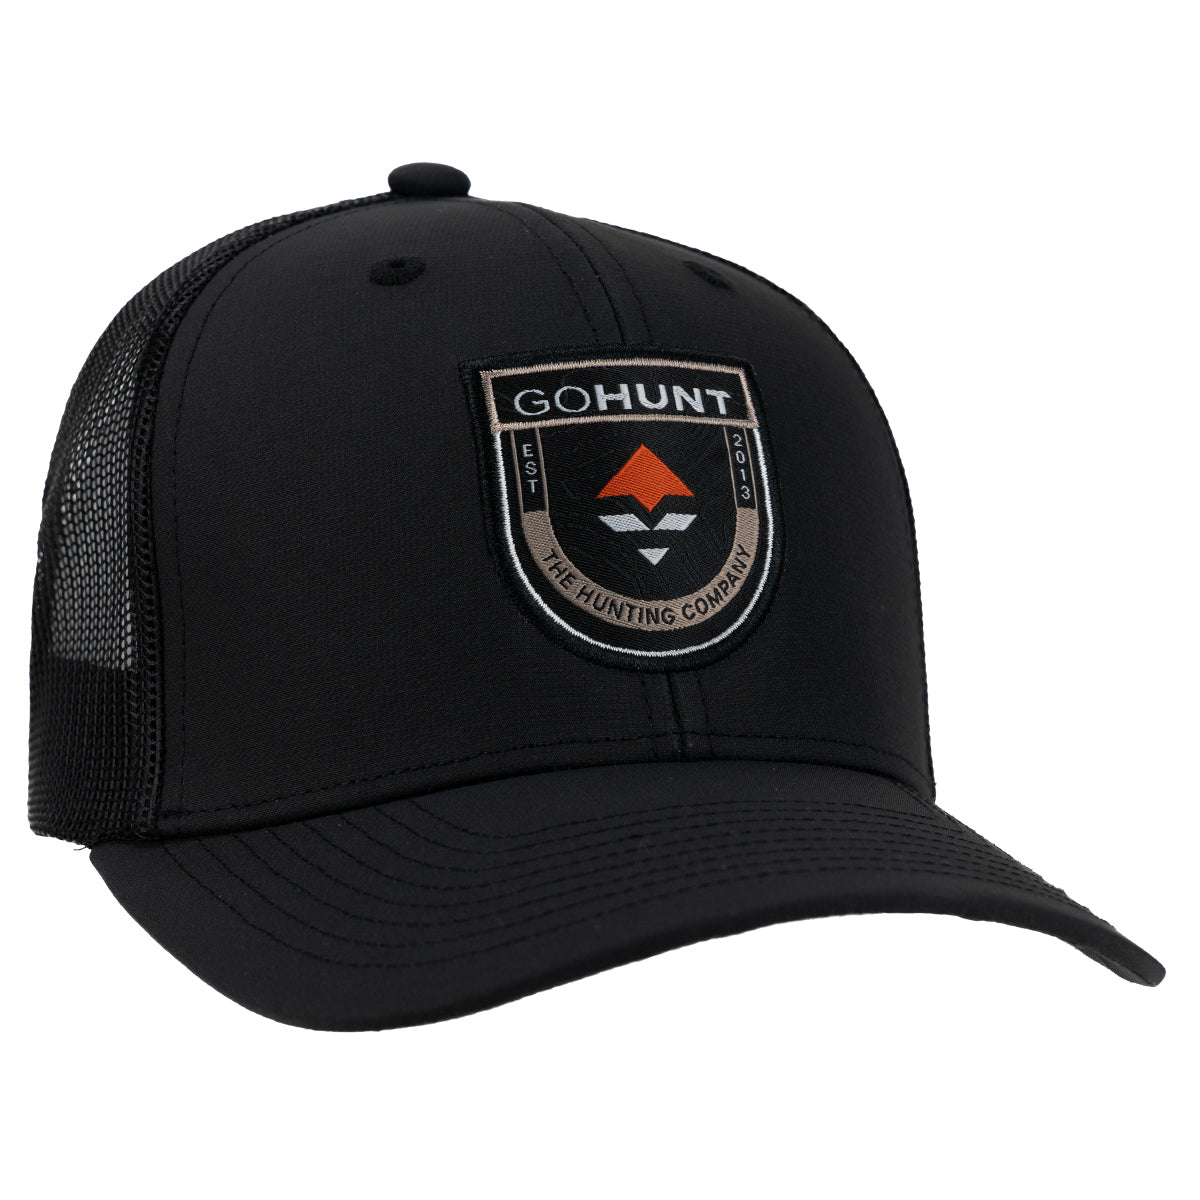 GOHUNT Certified Hat in Black by GOHUNT | GOHUNT - GOHUNT Shop